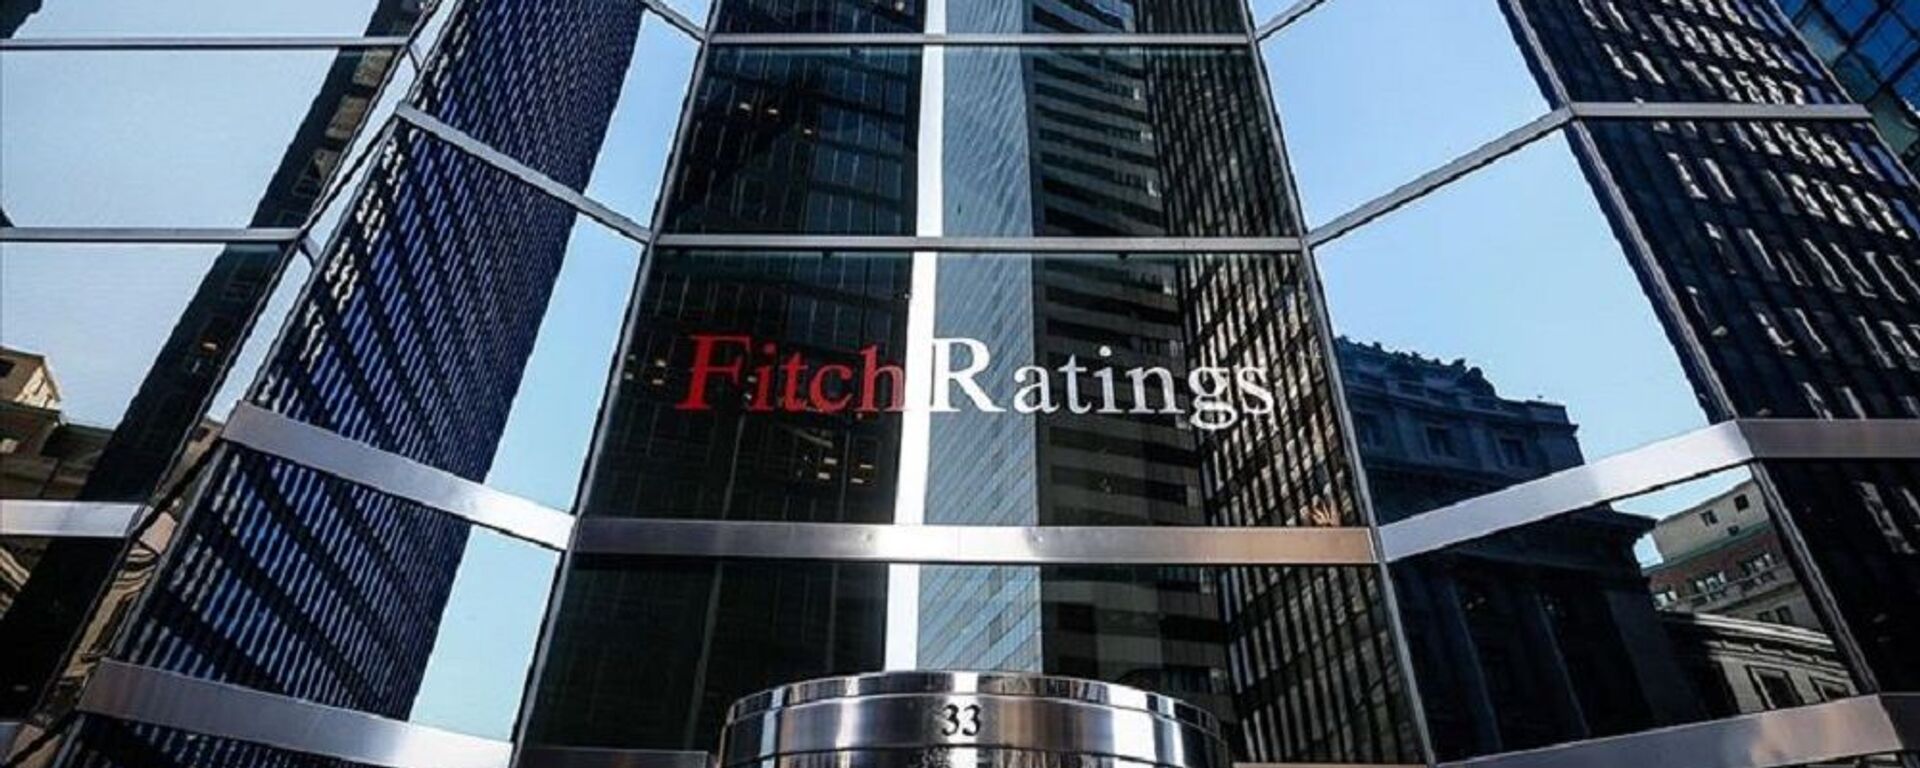 Fitch Ratings - Sputnik Türkiye, 1920, 08.12.2021